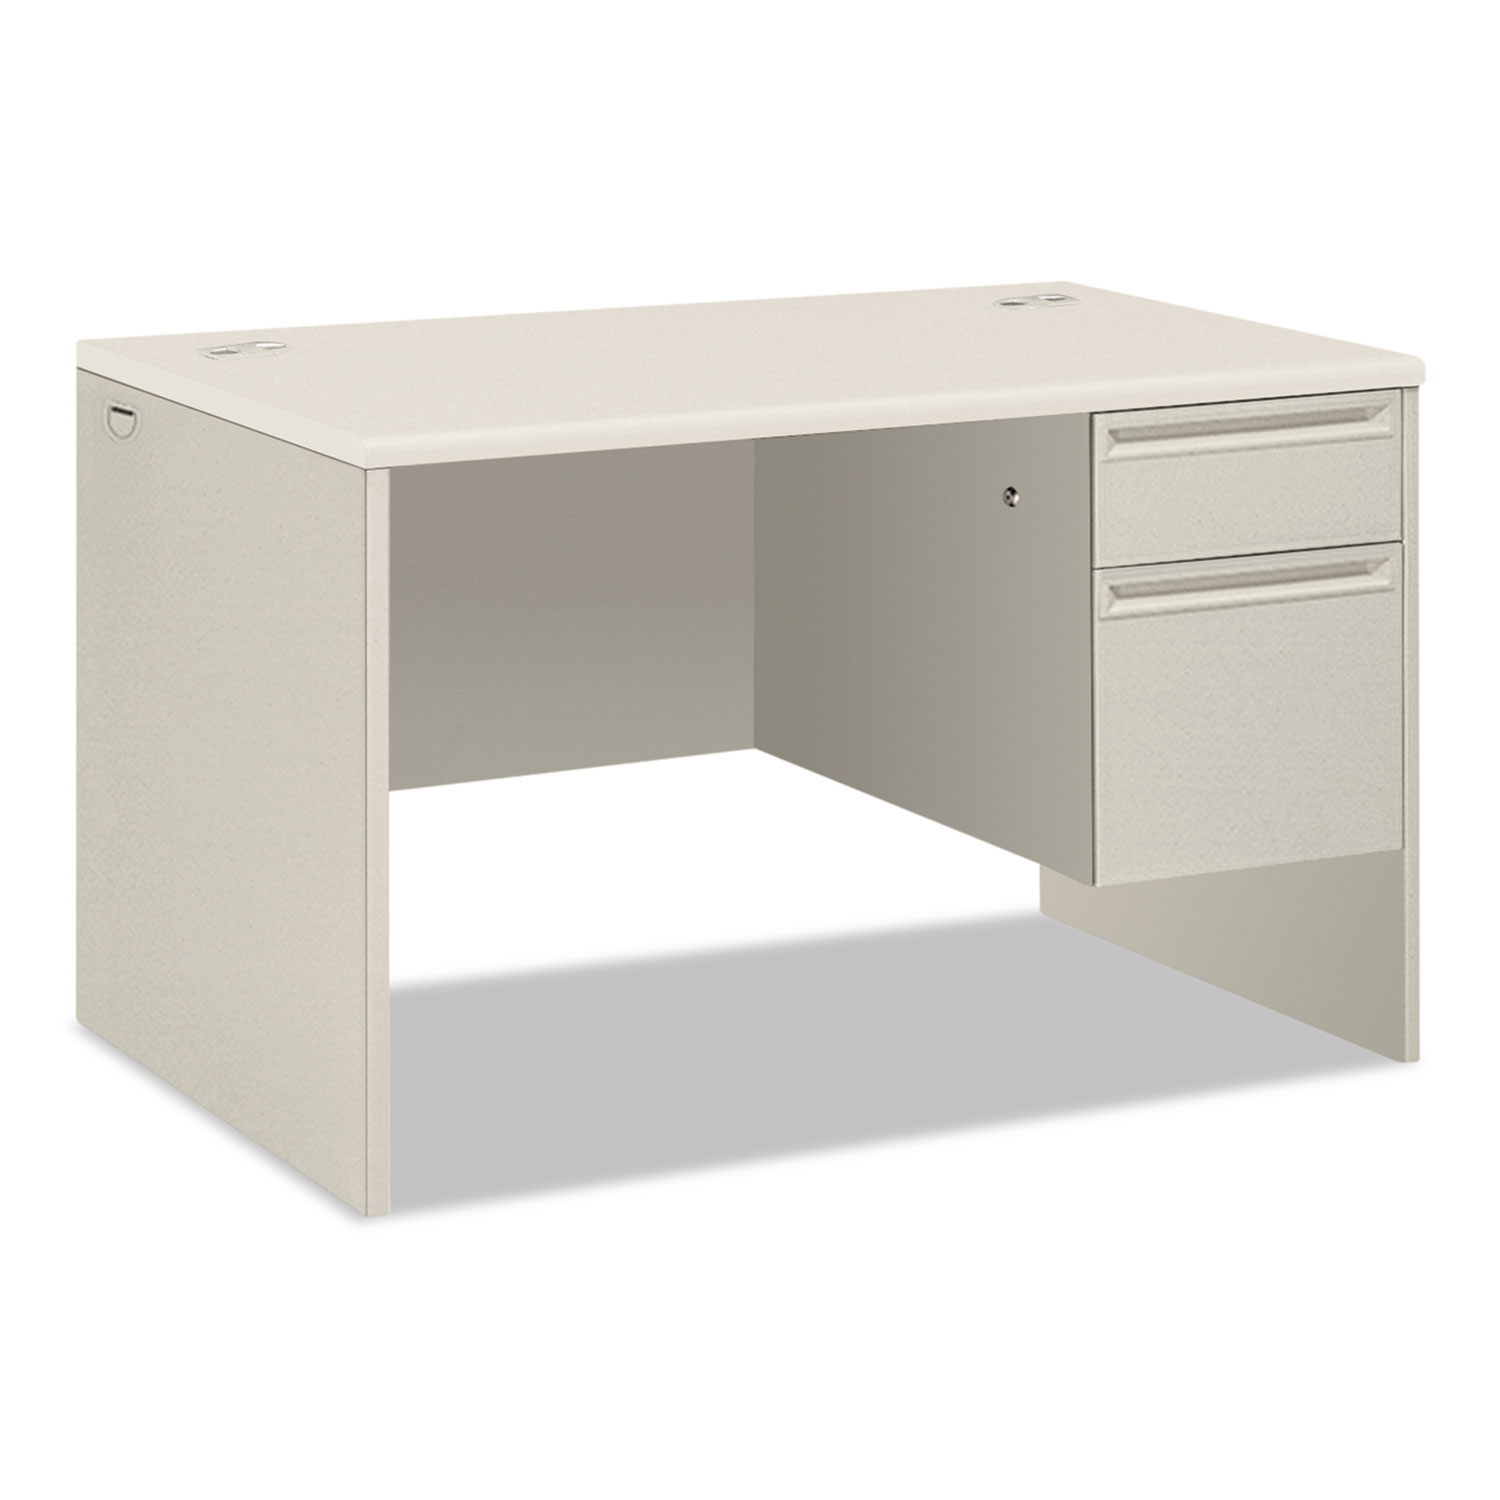  HON H38251.B9.Q 38000 Series Single Pedestal Desk, Right, 48w x 30d x 30h, Silver Mesh/Light Gray (HON38251B9Q) 